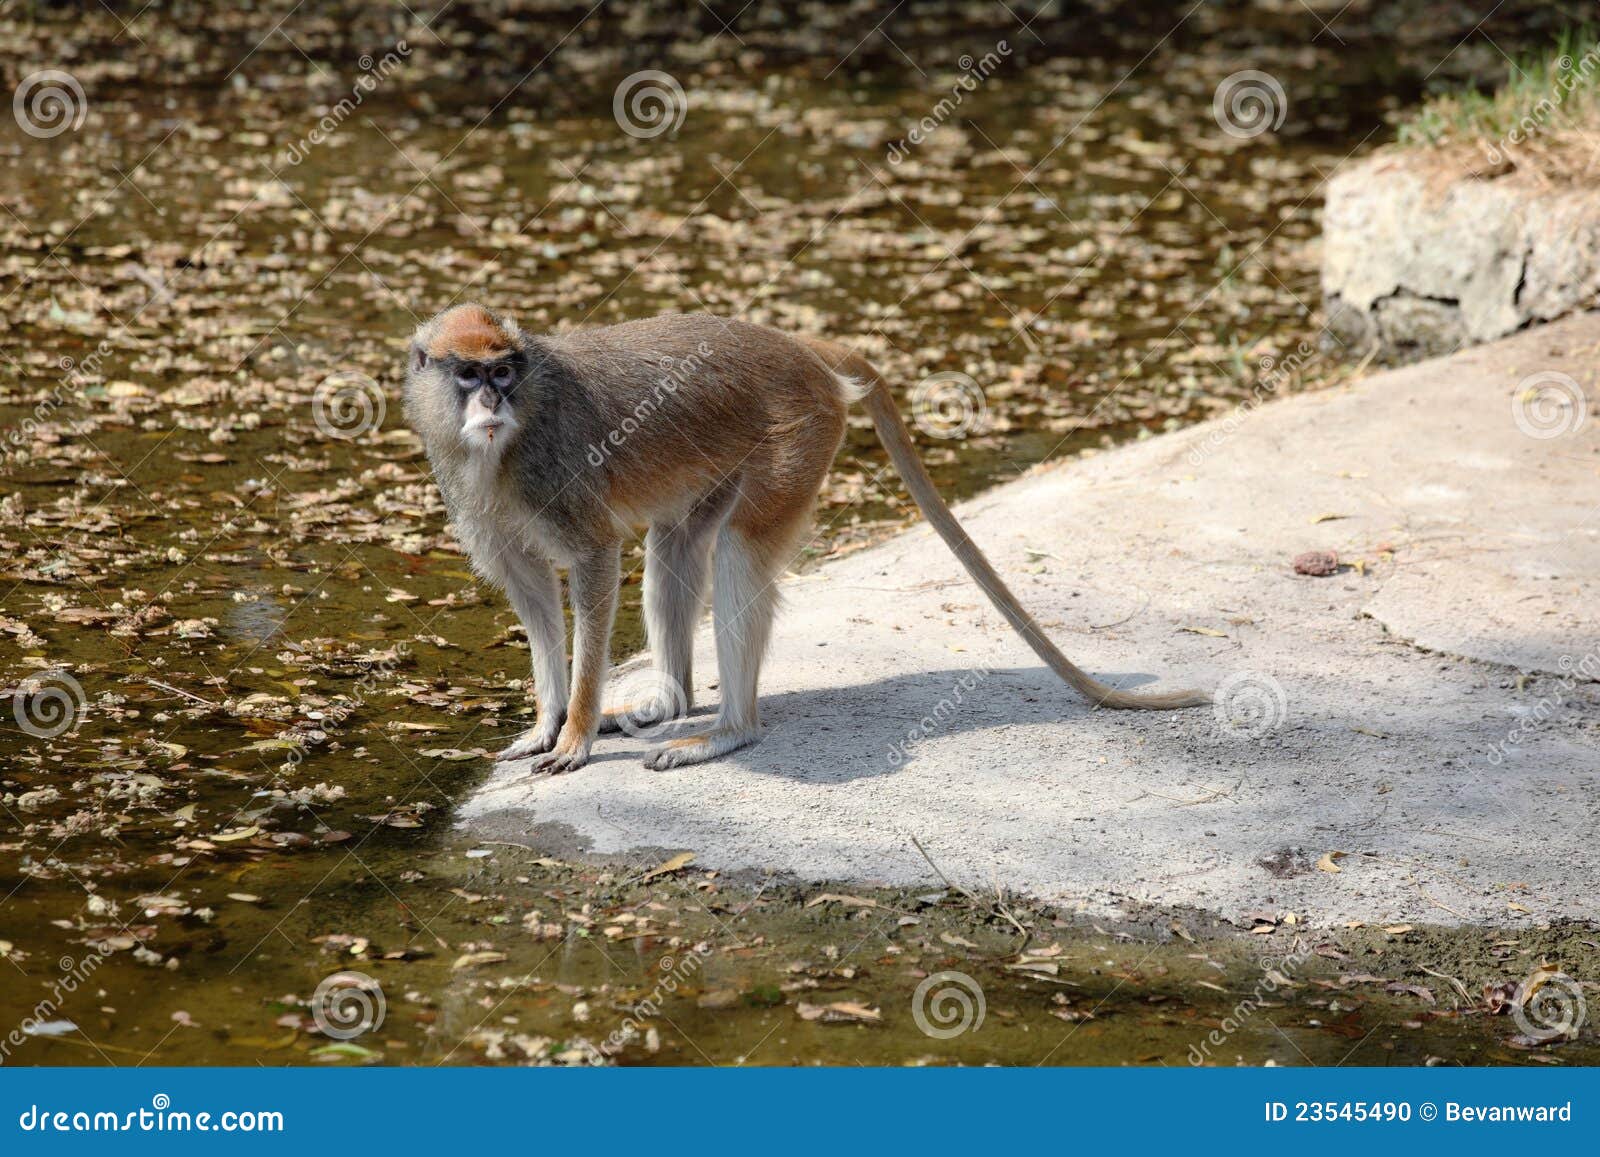 patas monkey at water's edge